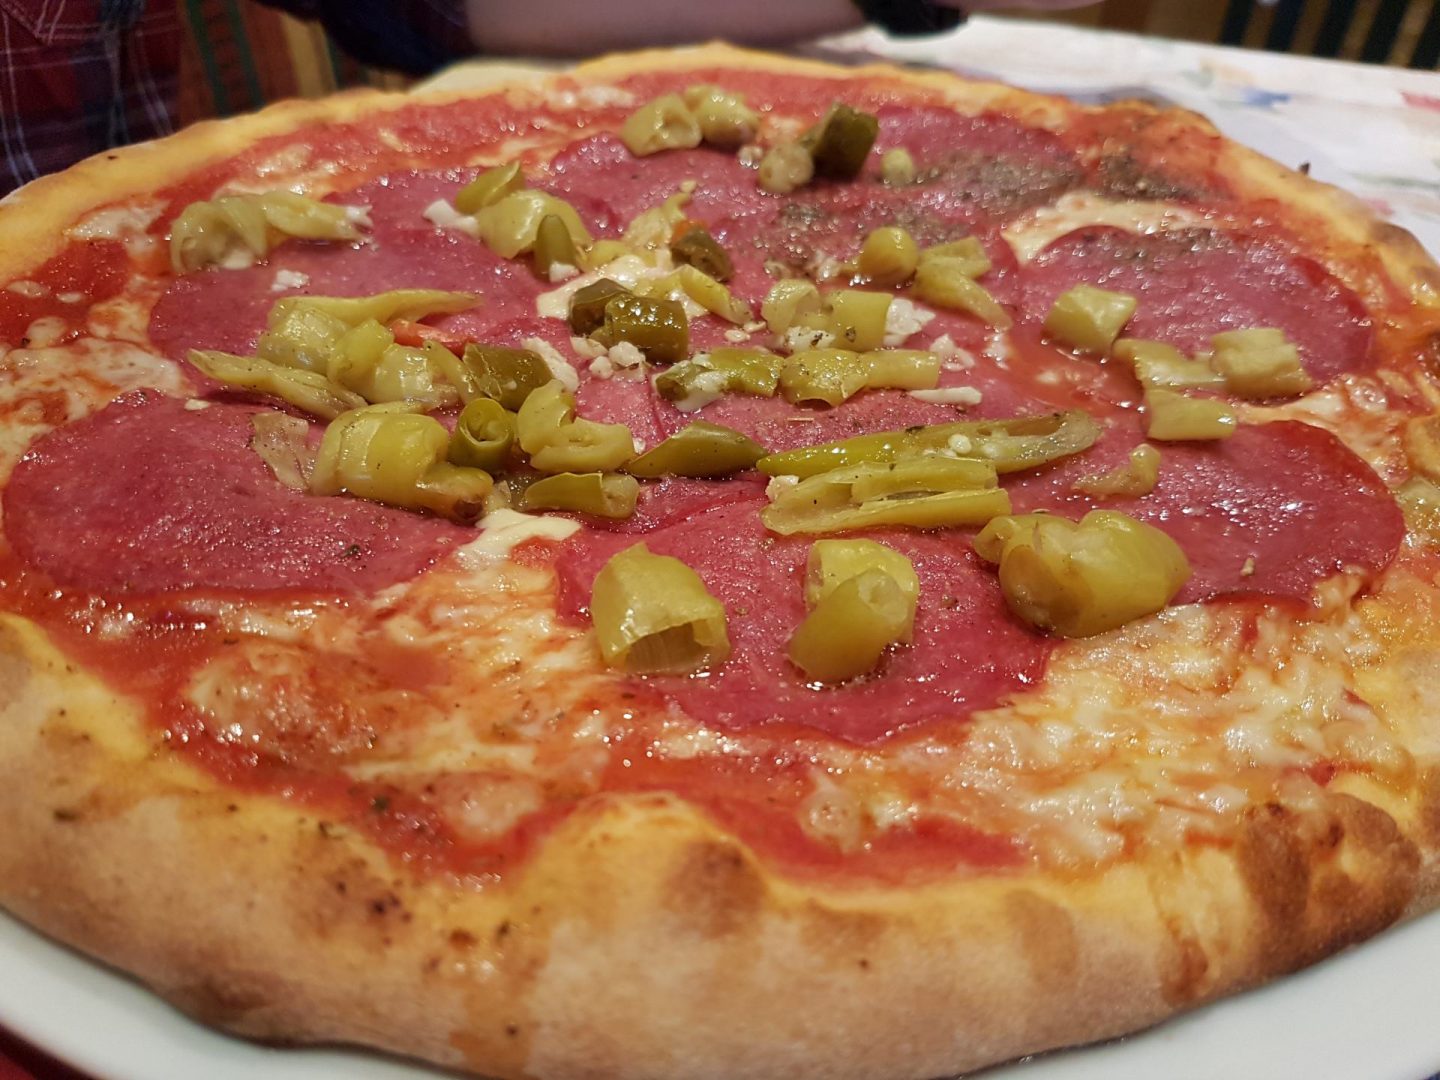 Erfahrung Bewertung Kritik Pizzeria Don Camillo Reith im Alpbachtal Pizza Diavolo Foodblog Sternestulle